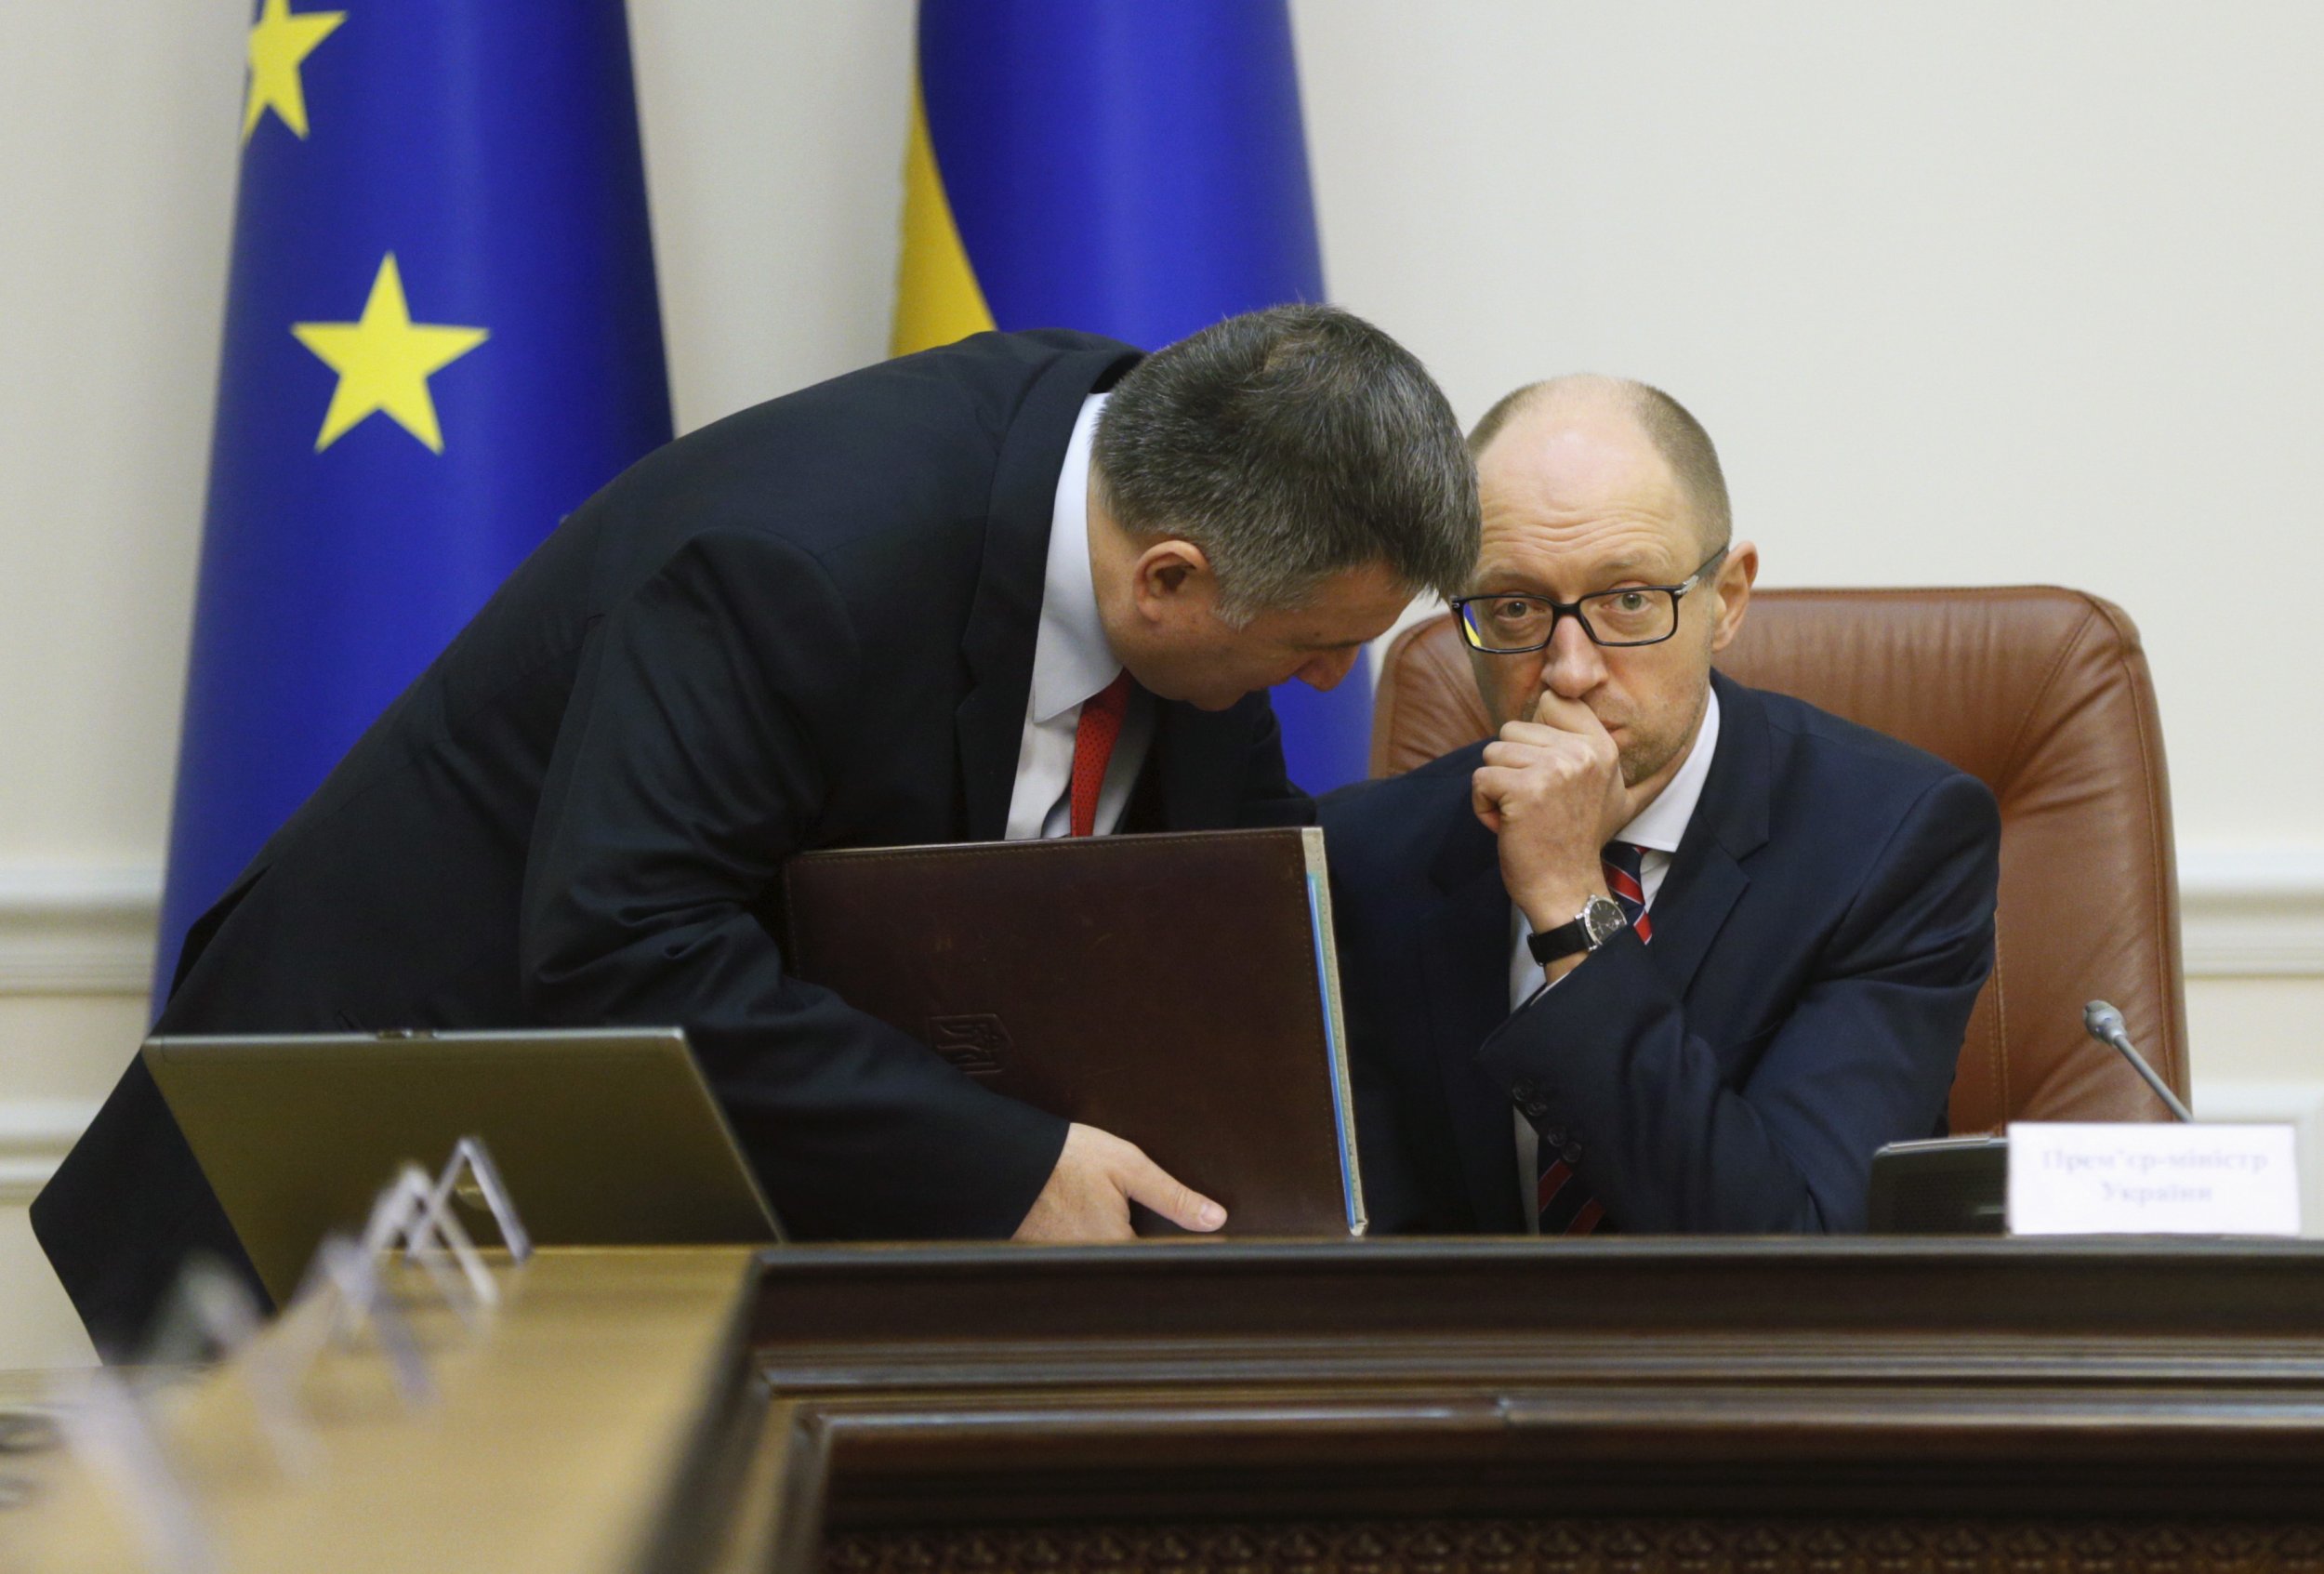 Avakov leans in to speak with Yatsenyuk at his desk